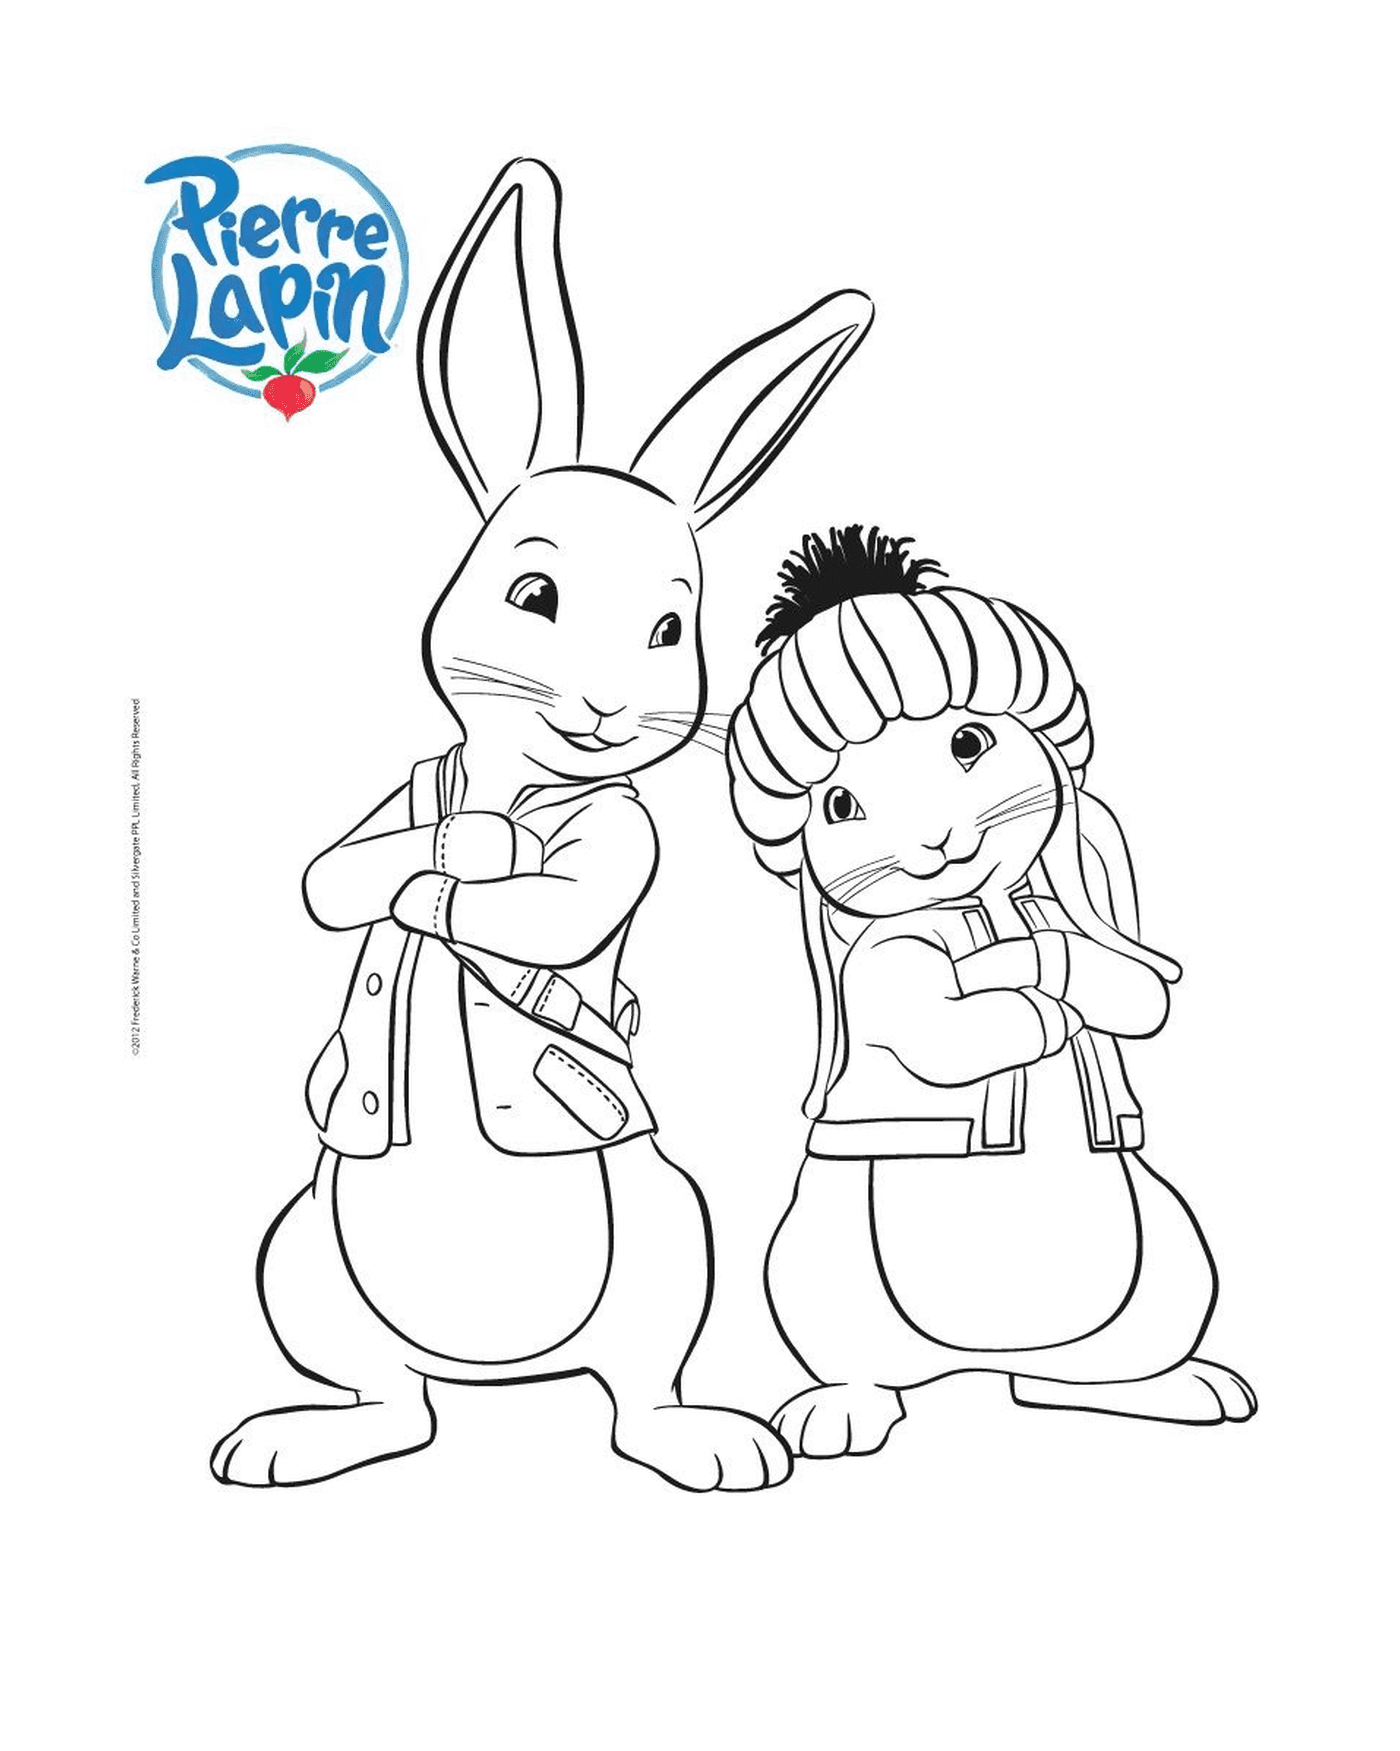   Peter Rabbit par Beatrix Potter 